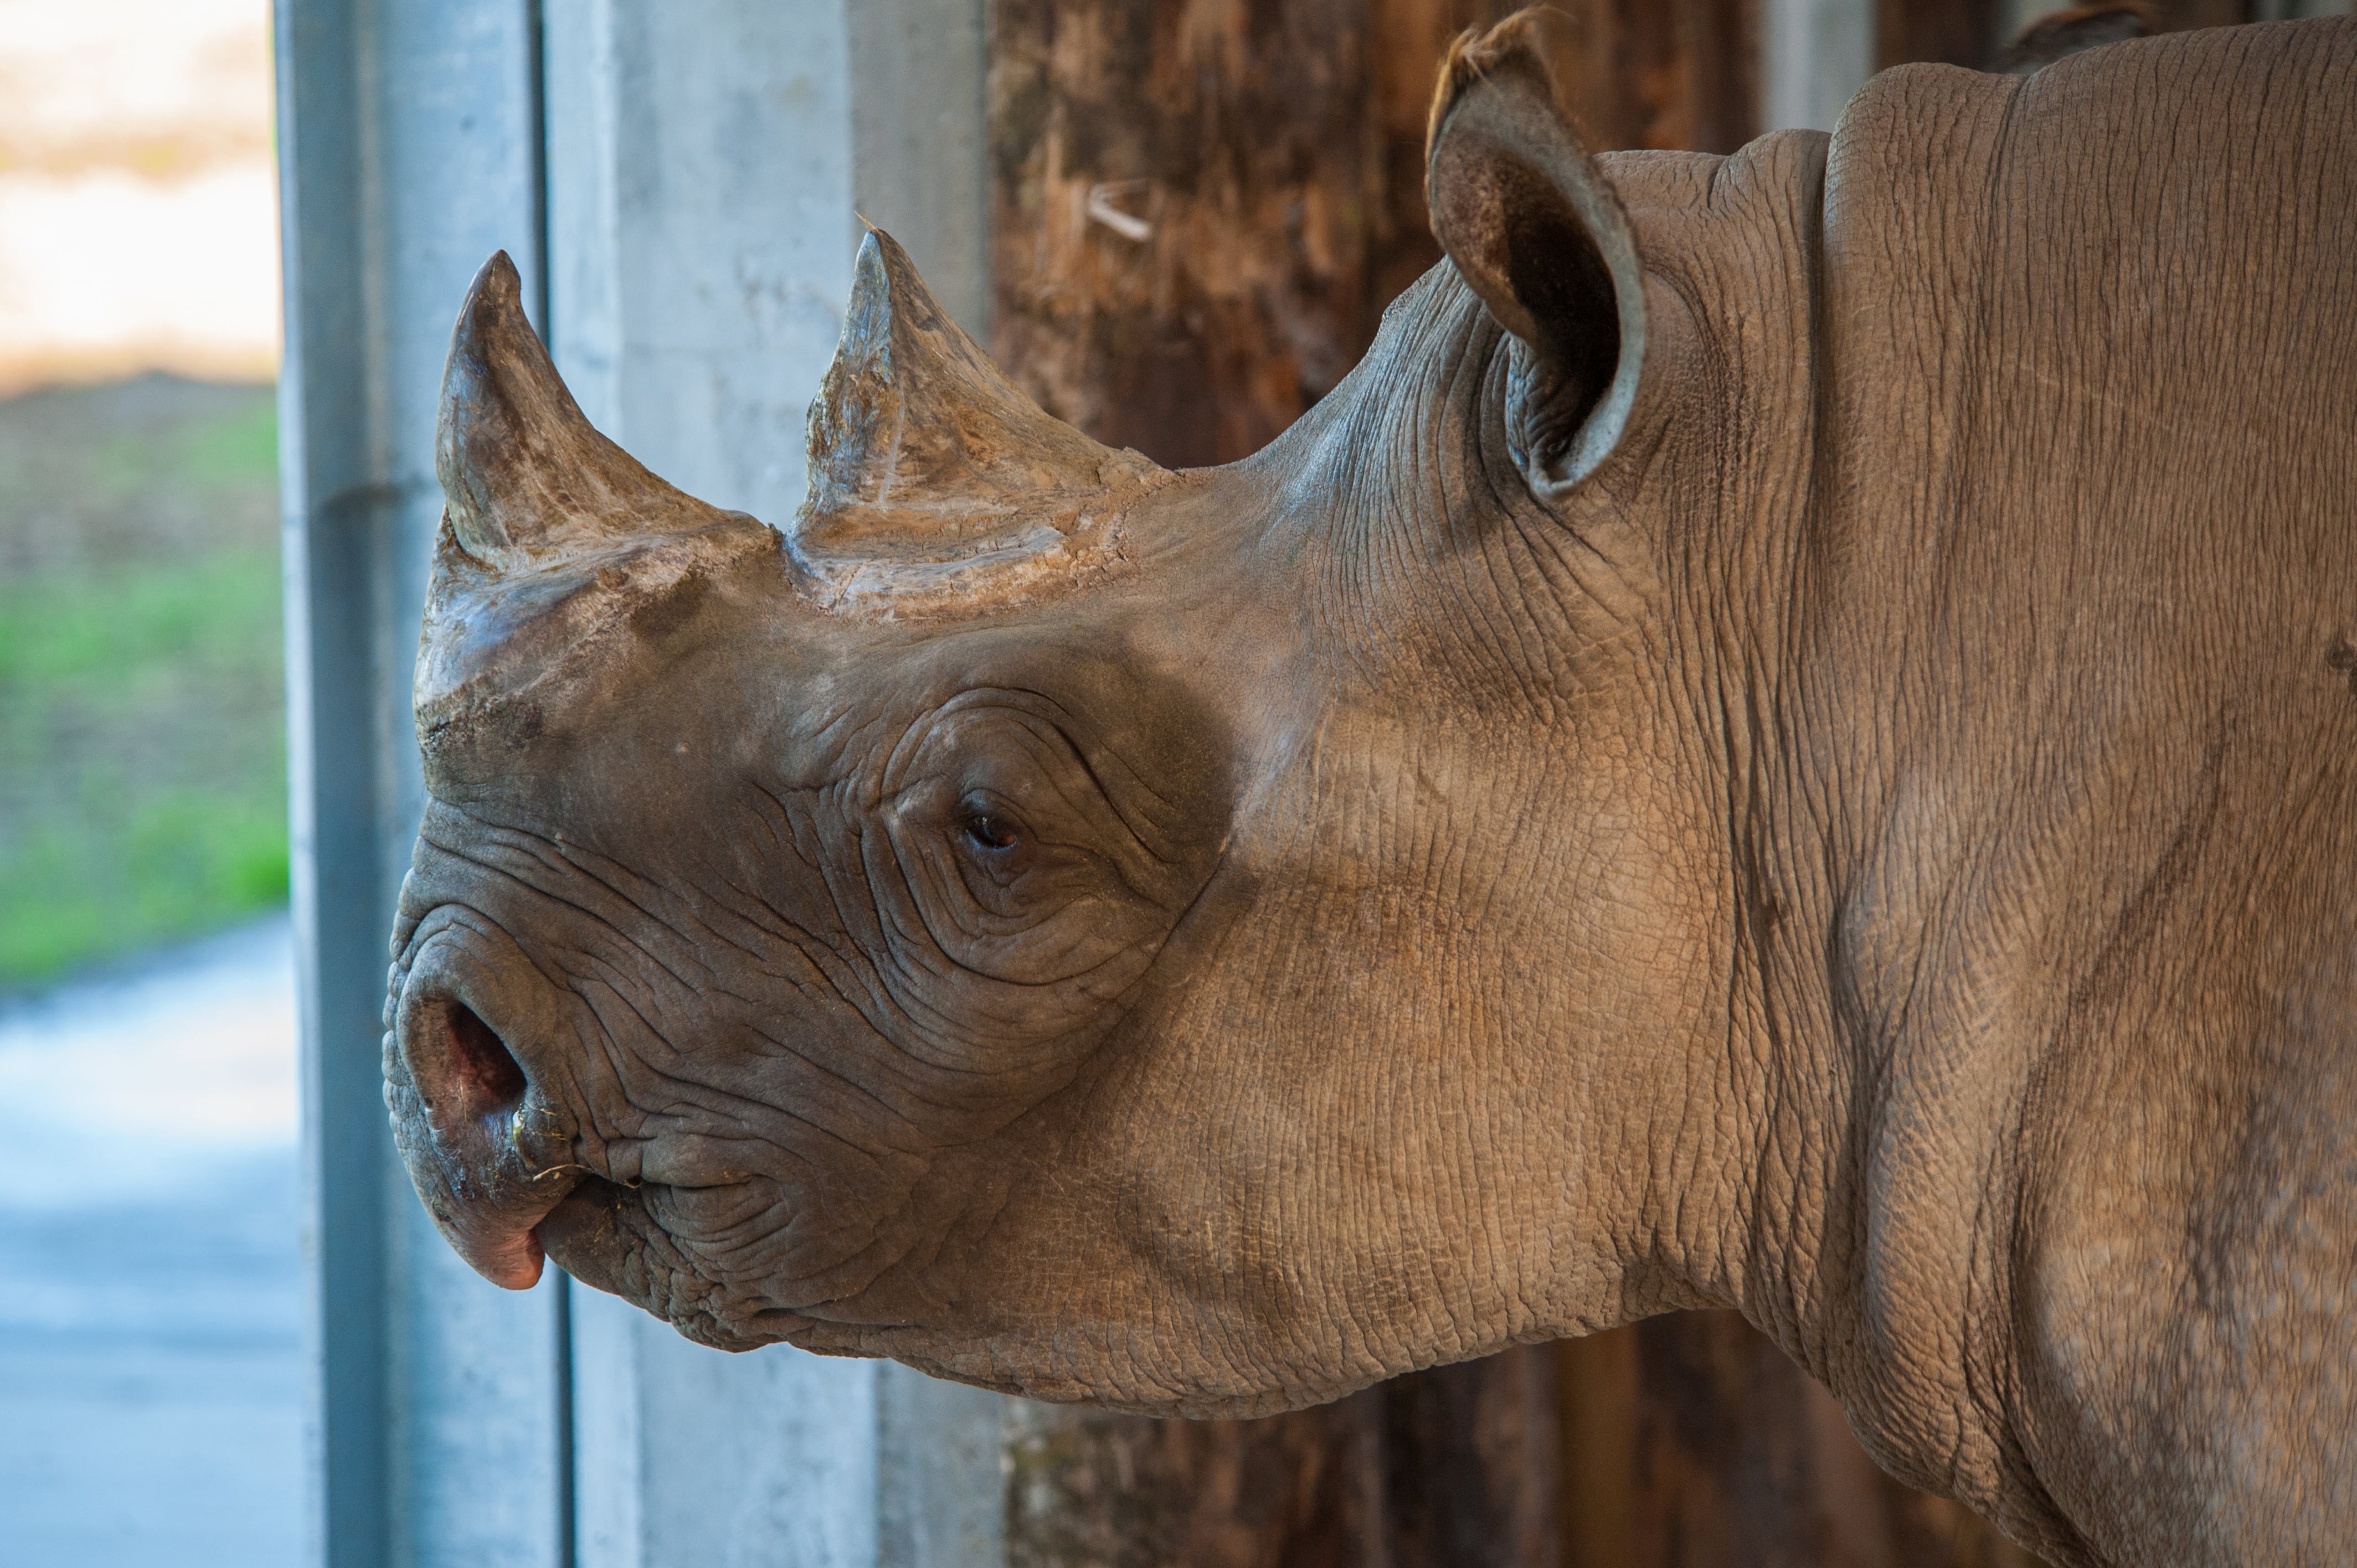 Manyara rhino inside enclosure